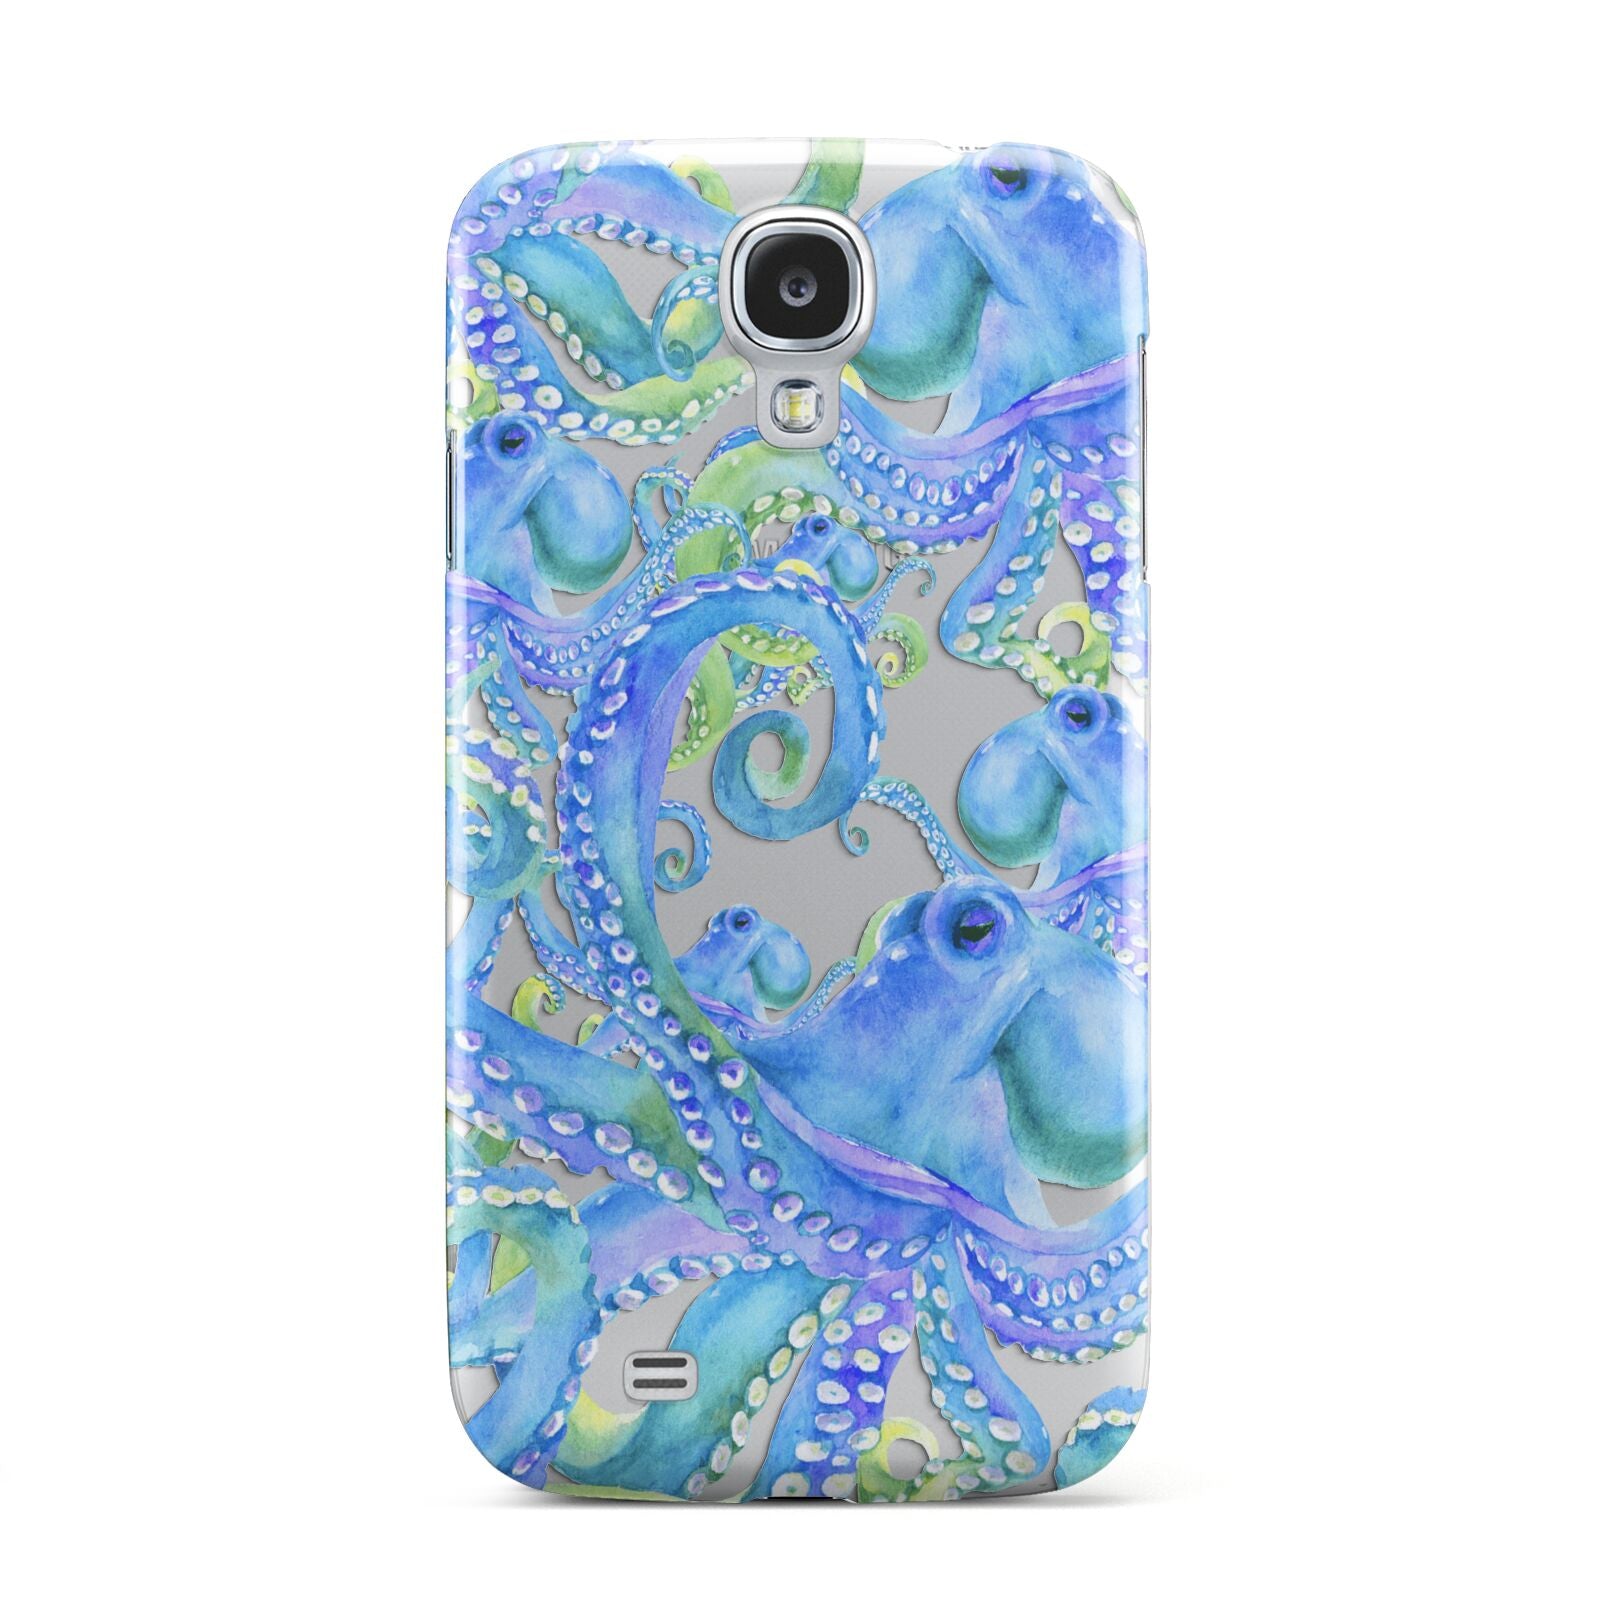 Octopus Samsung Galaxy S4 Case